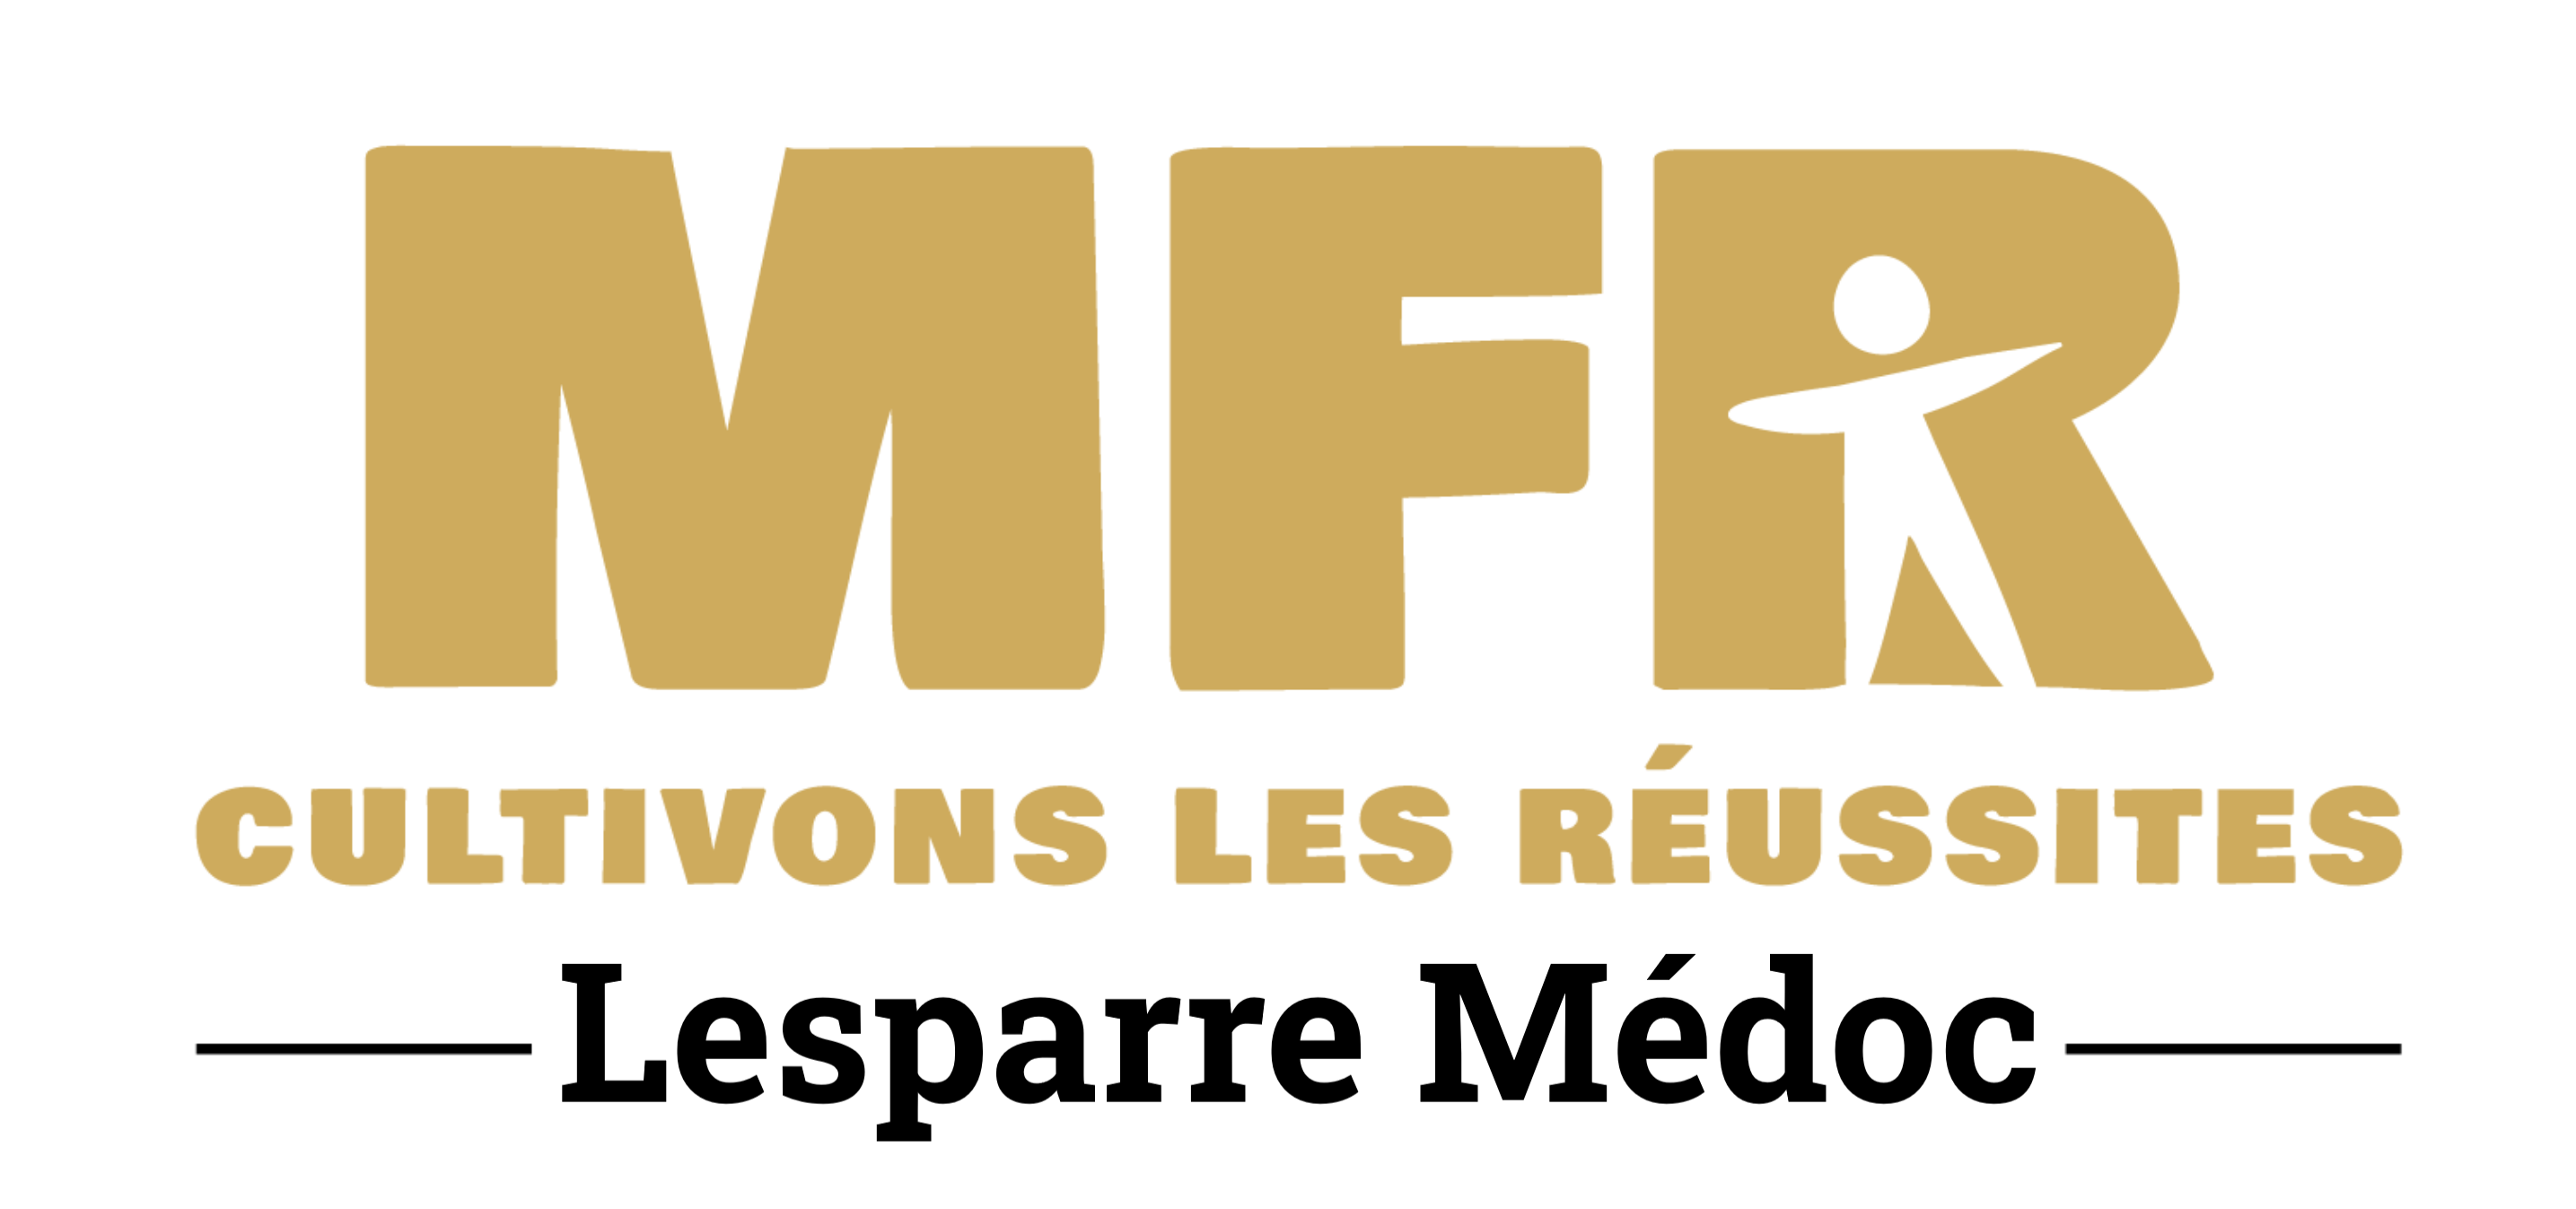 Logo MFR Lesparre